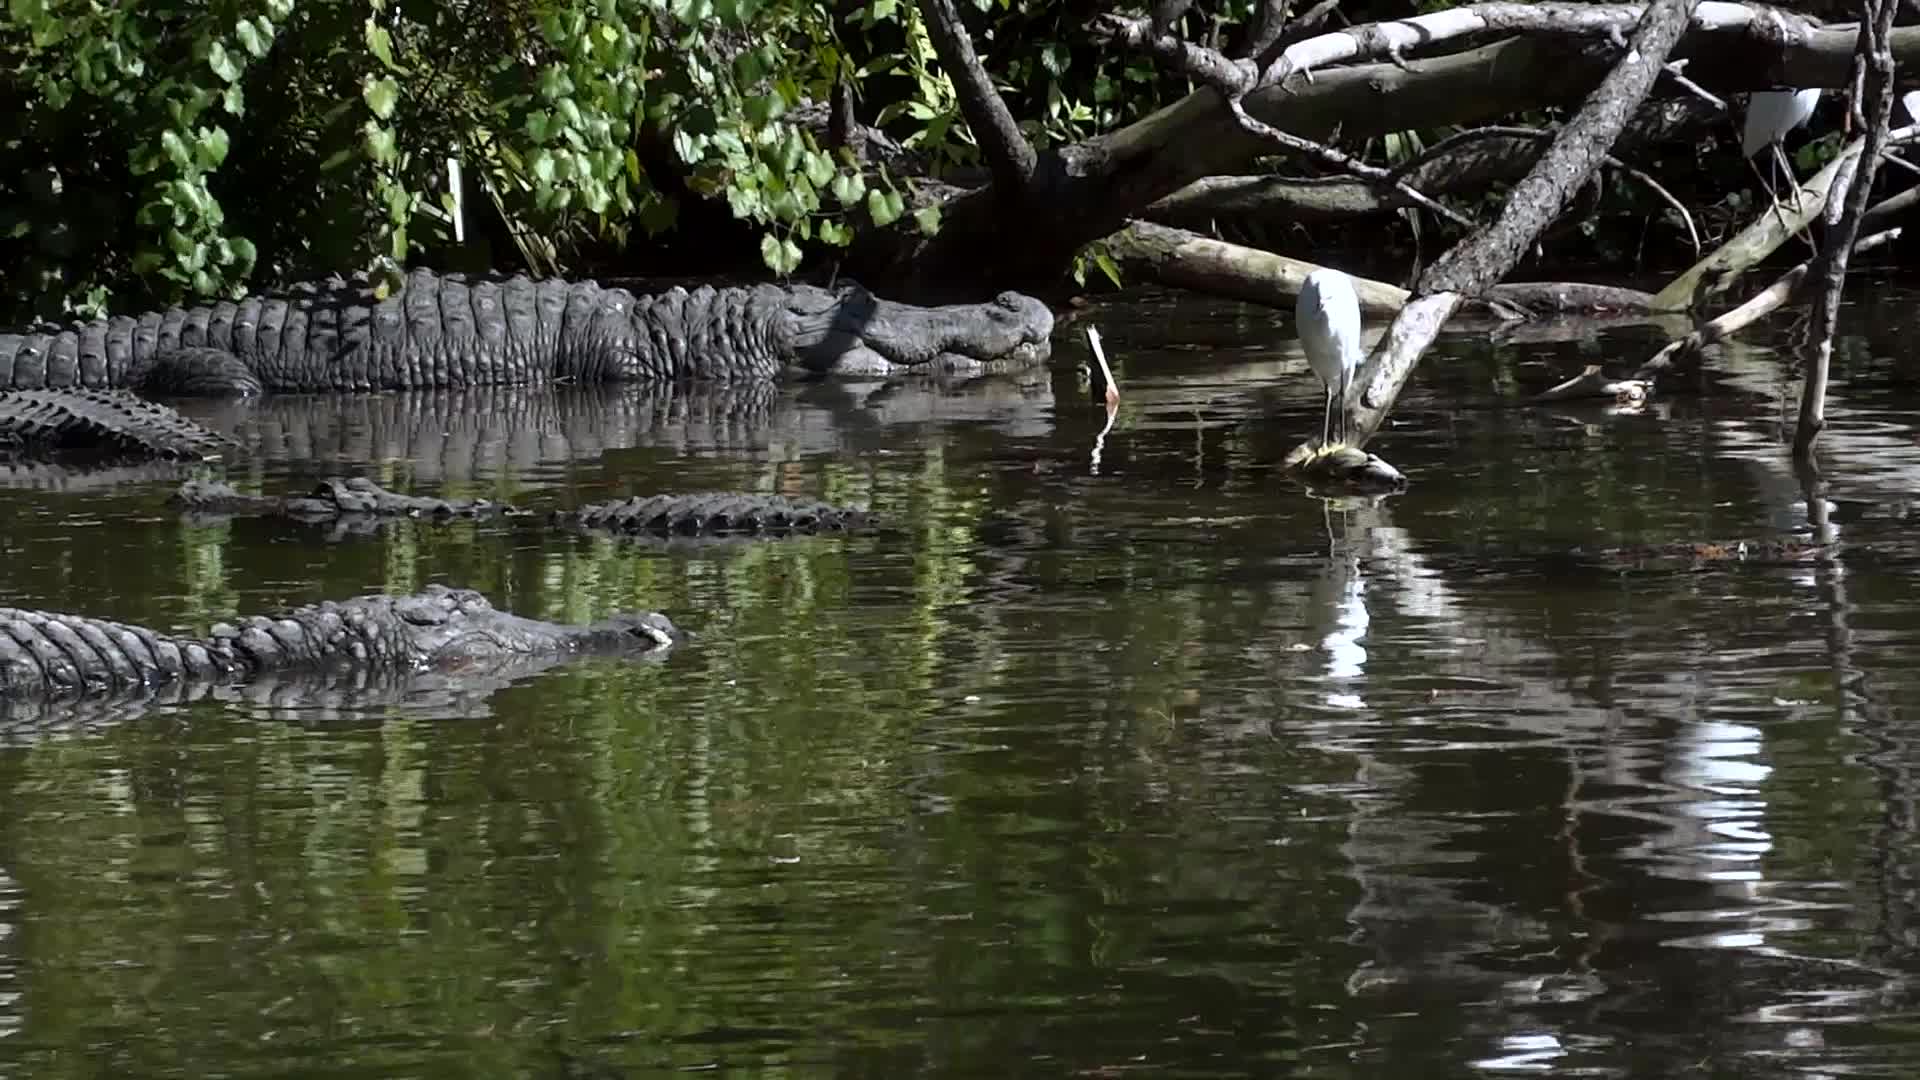 American Alligator - Animals - 4fun.com